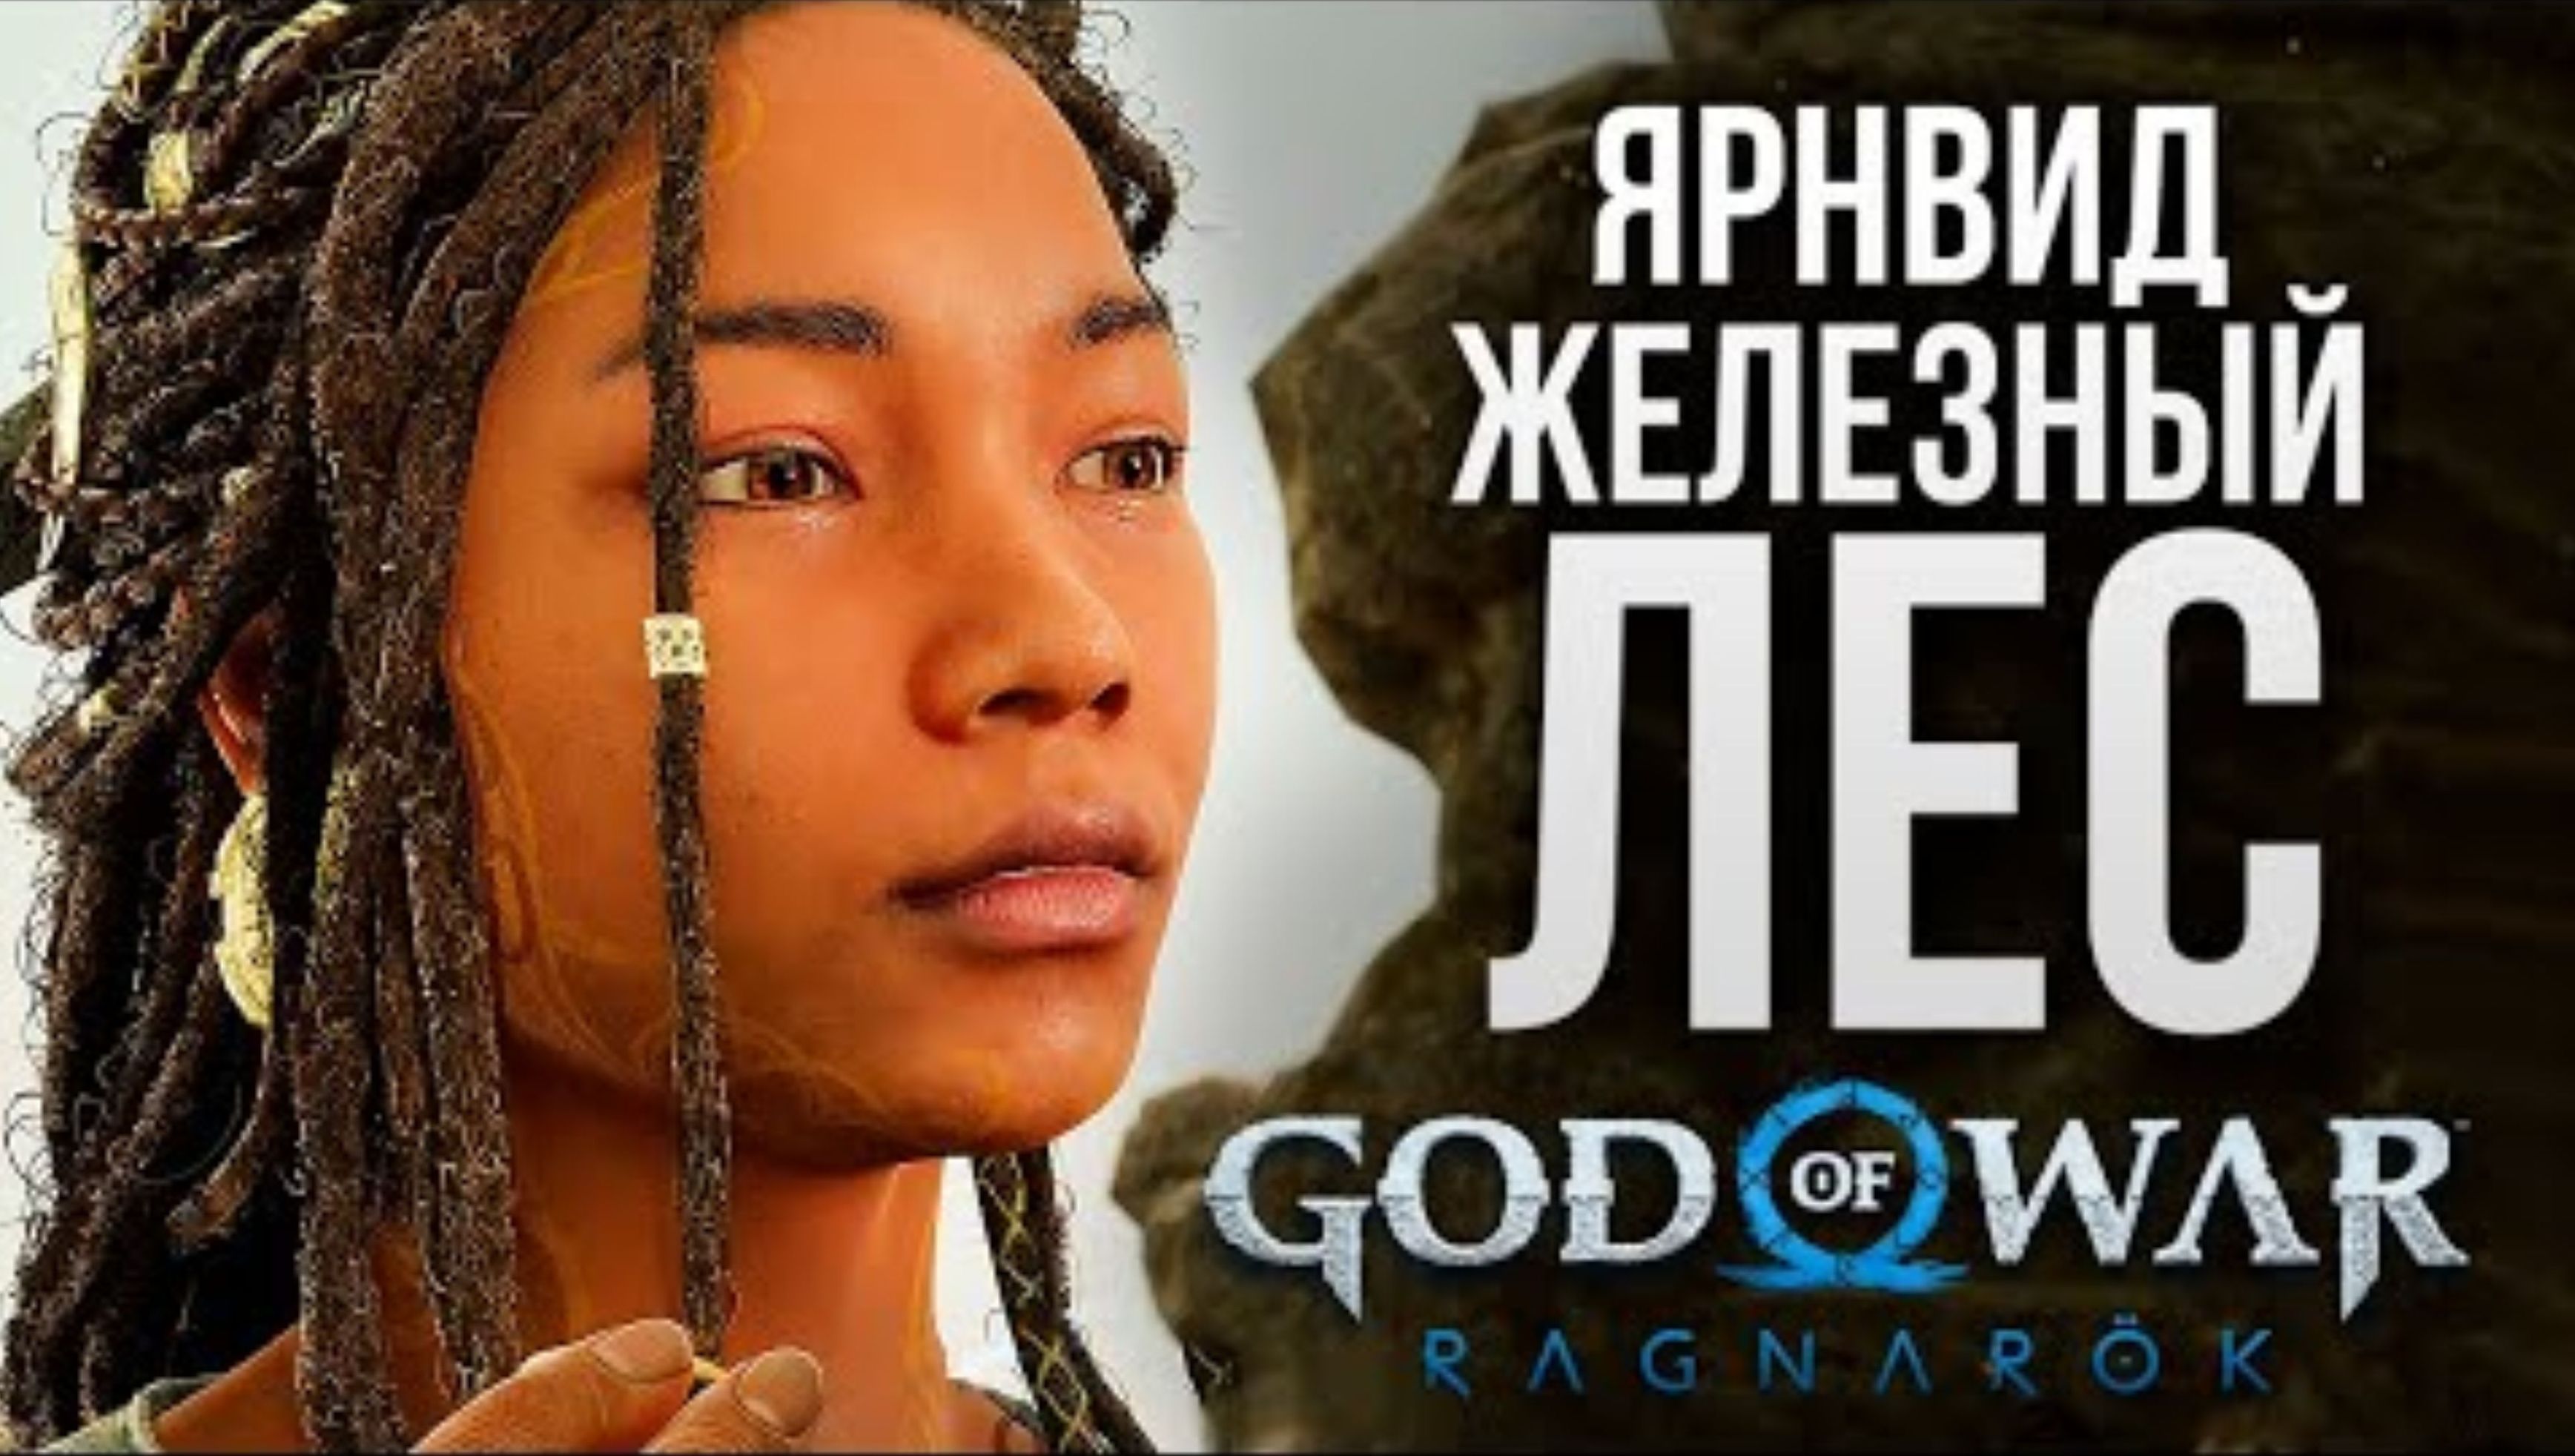 ЯРНВИД - ЖЕЛЕЗНЫЙ ЛЕС - God of War_ Ragnarok #9